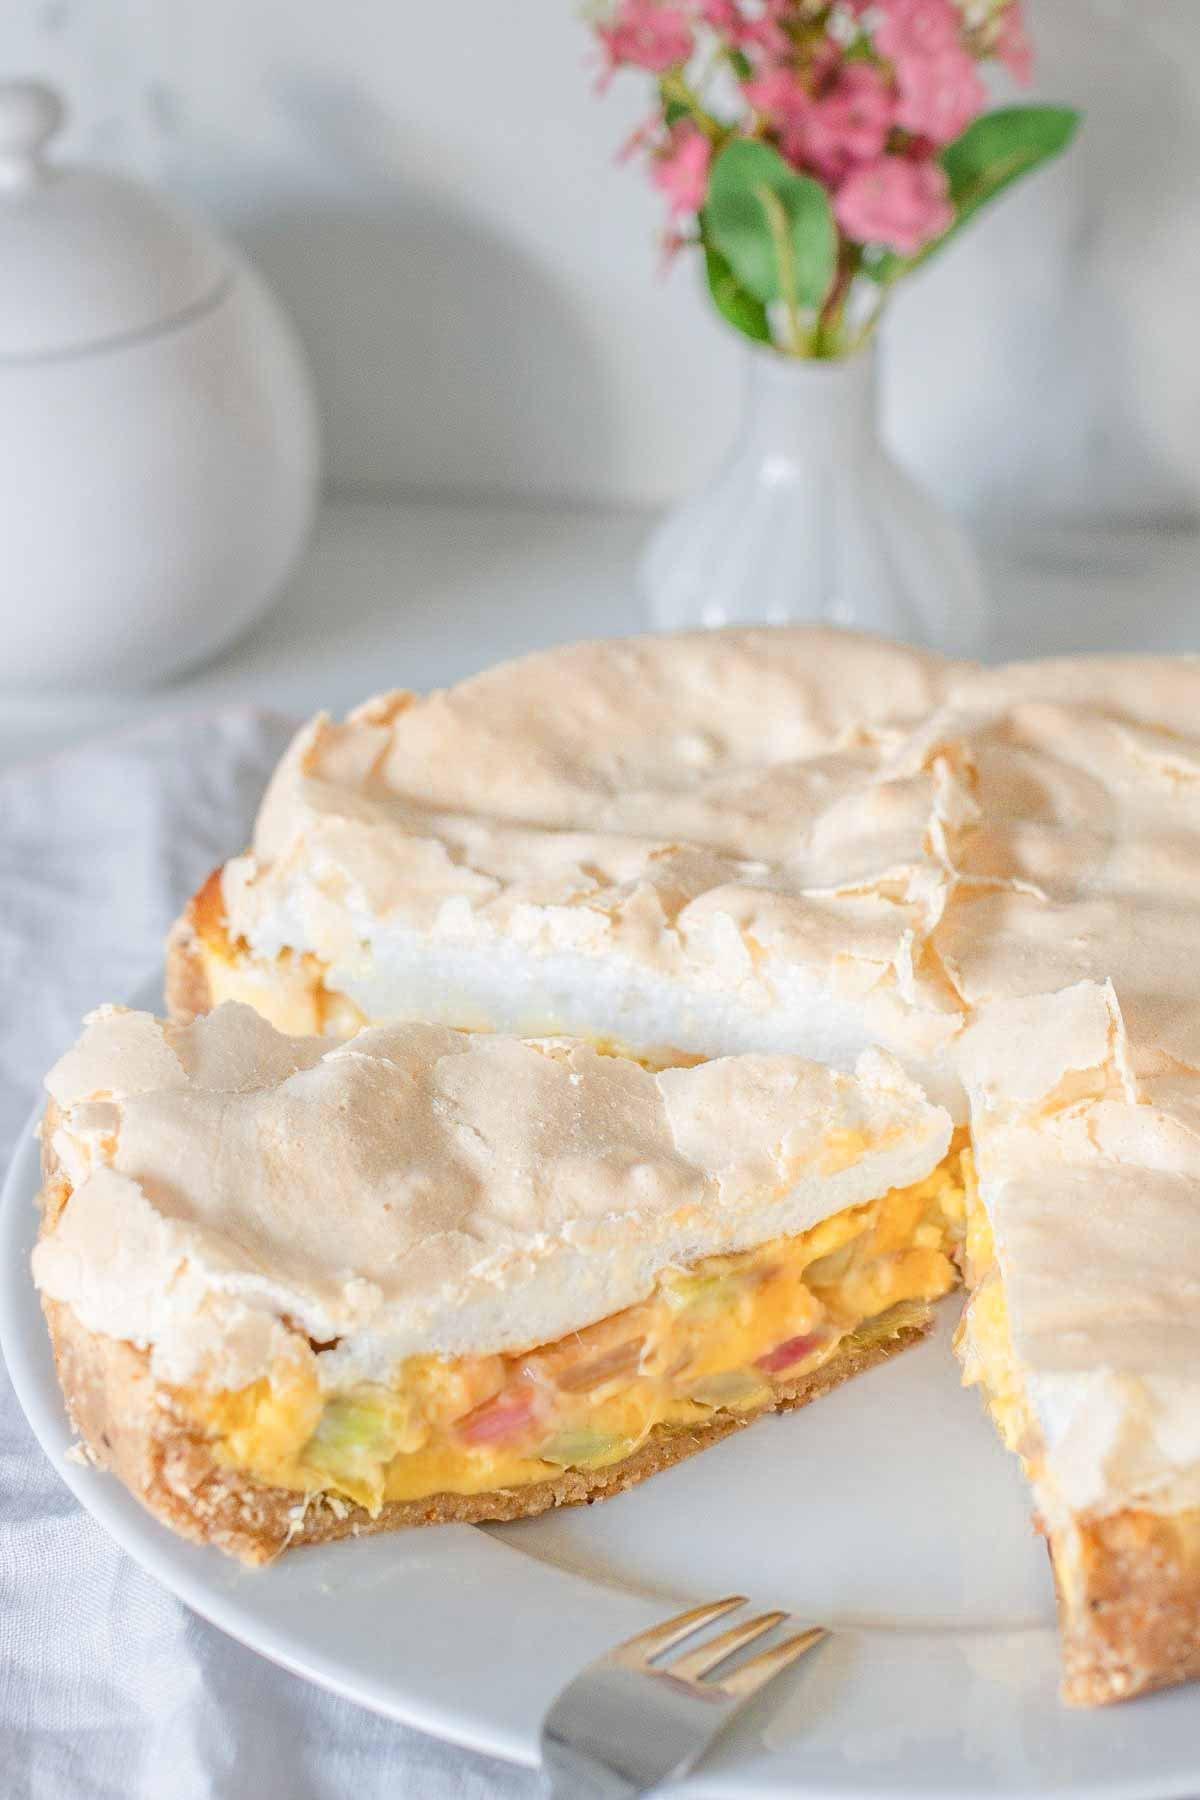 german Rhubarb Sour Cream custard pie with meringue topping on a cake platter